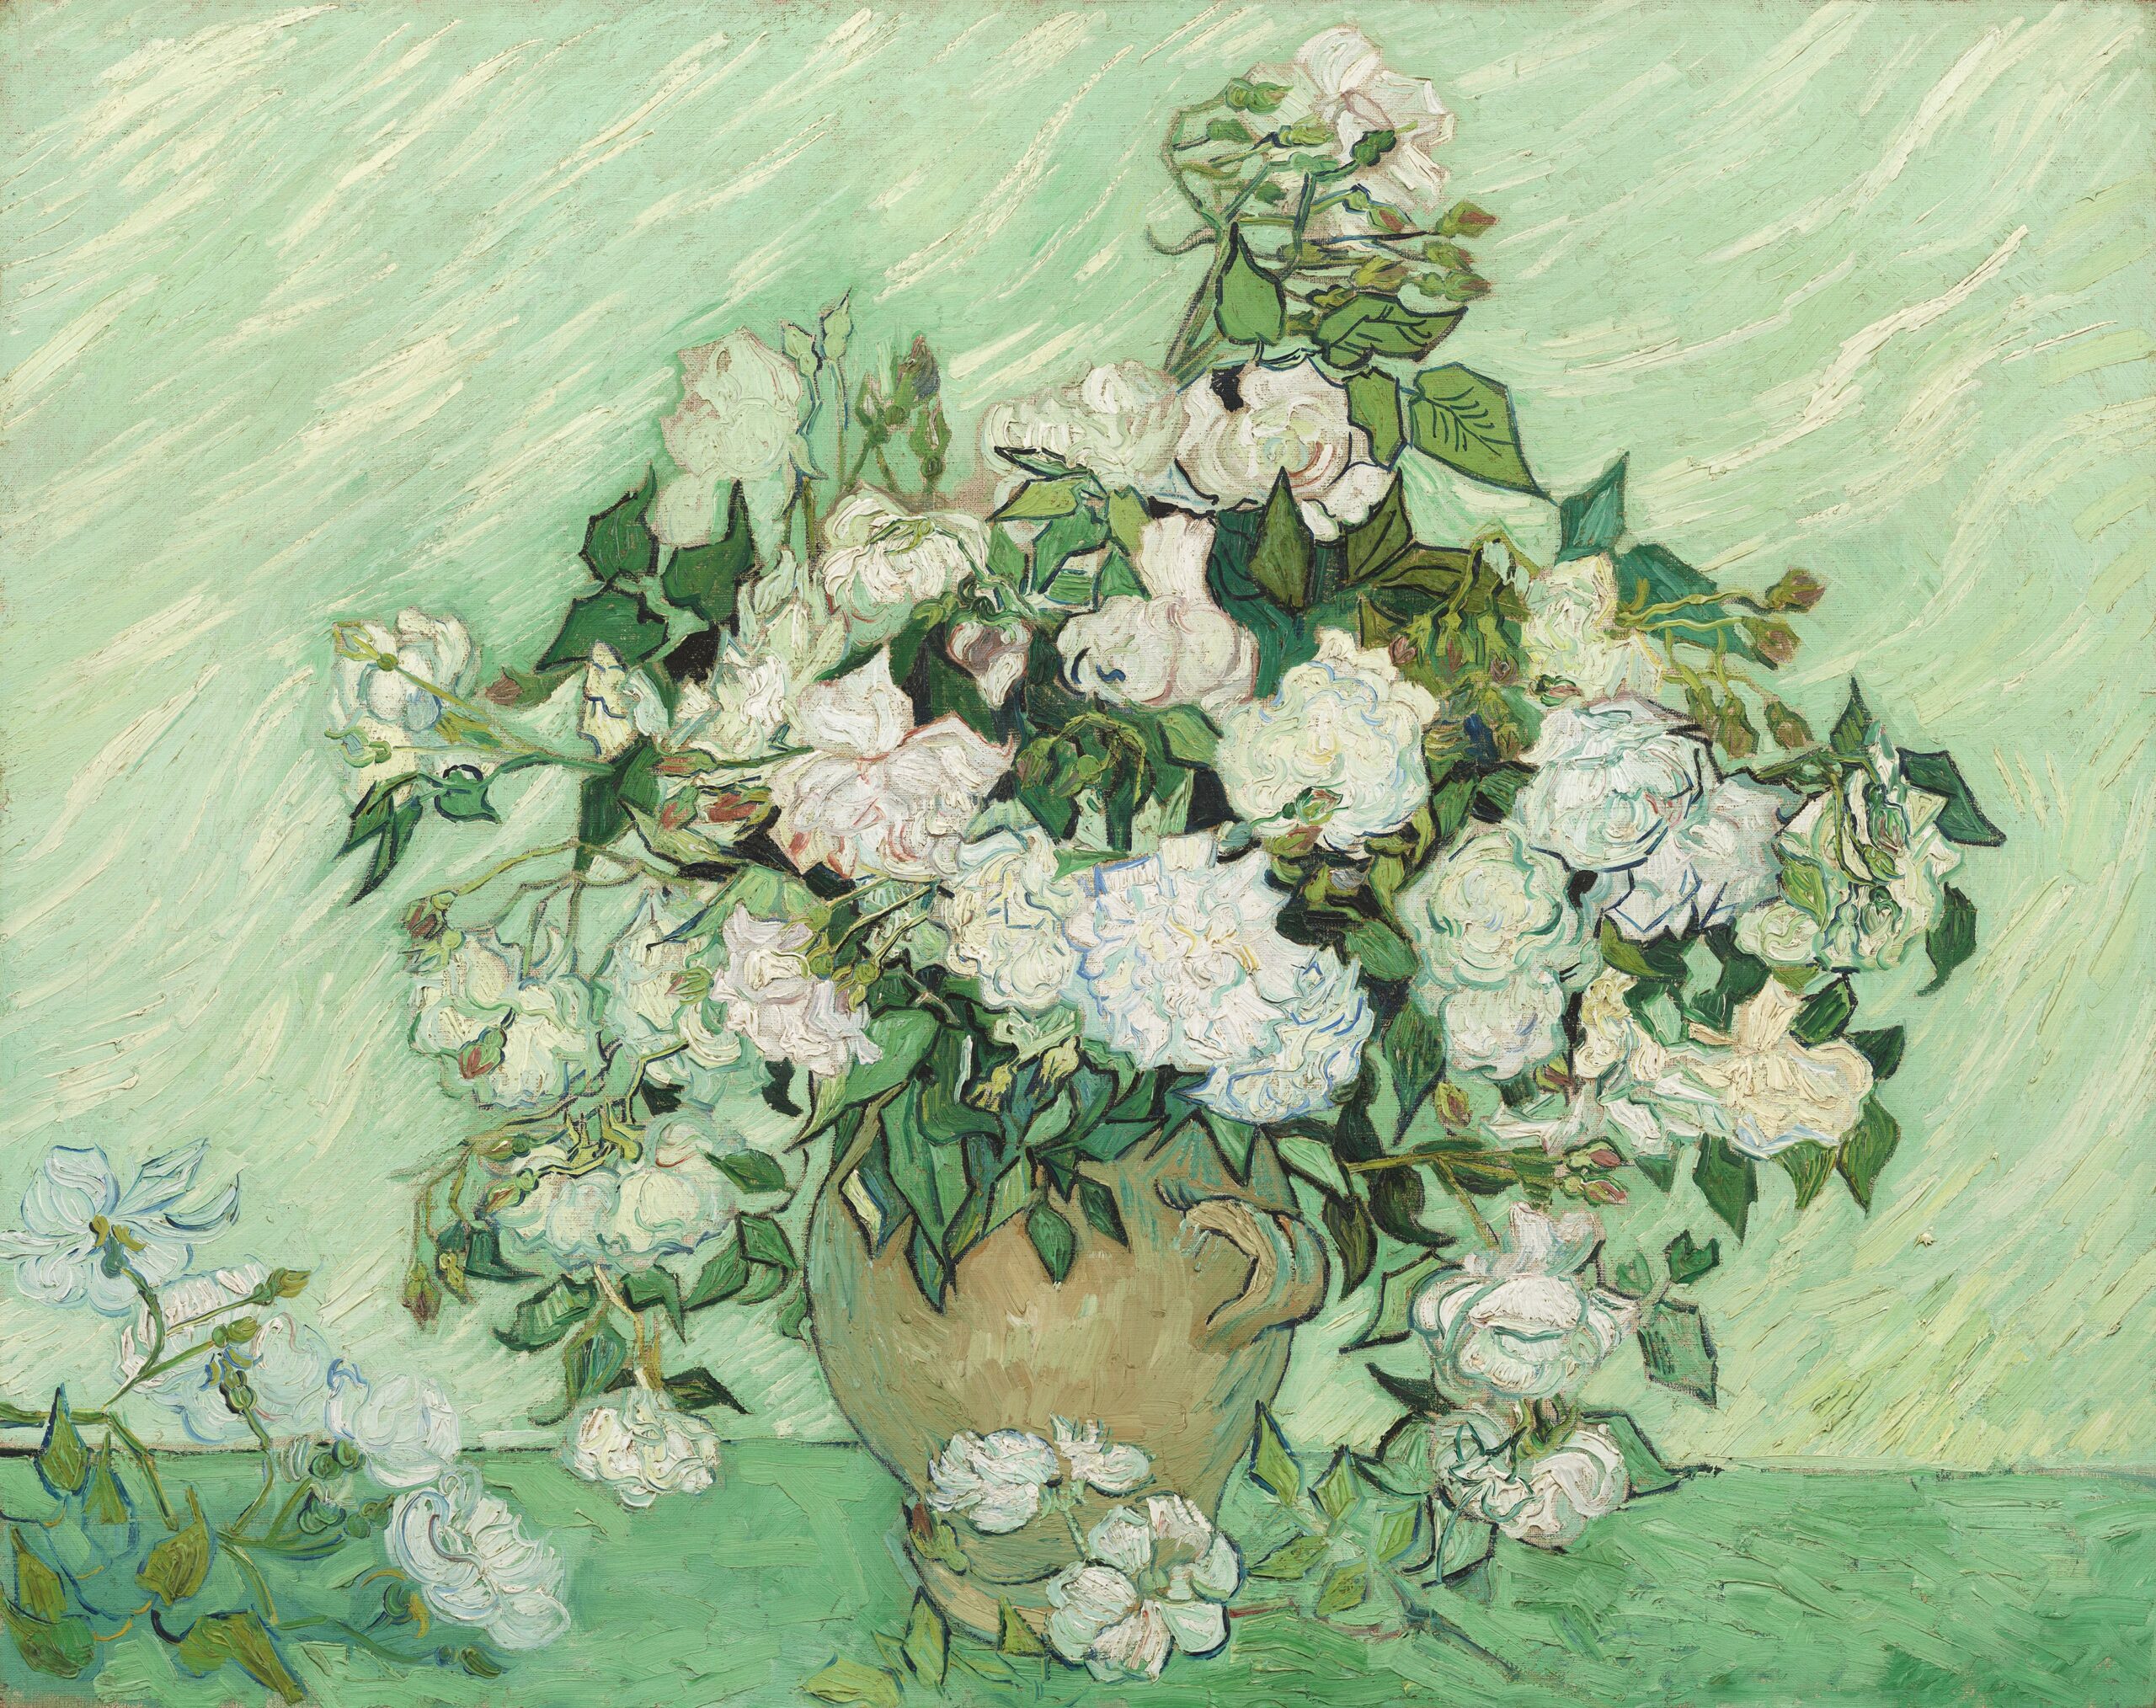 Vincent van Gogh (Dutch, 1853–1890), Roses, 1890. Oil on canvas, 27 15/16 × 35 7/16 in. National Gallery of Art, Washington, DC, gift of Pamela Harriman in memory of W. Averell Harriman, 1991.67.1.